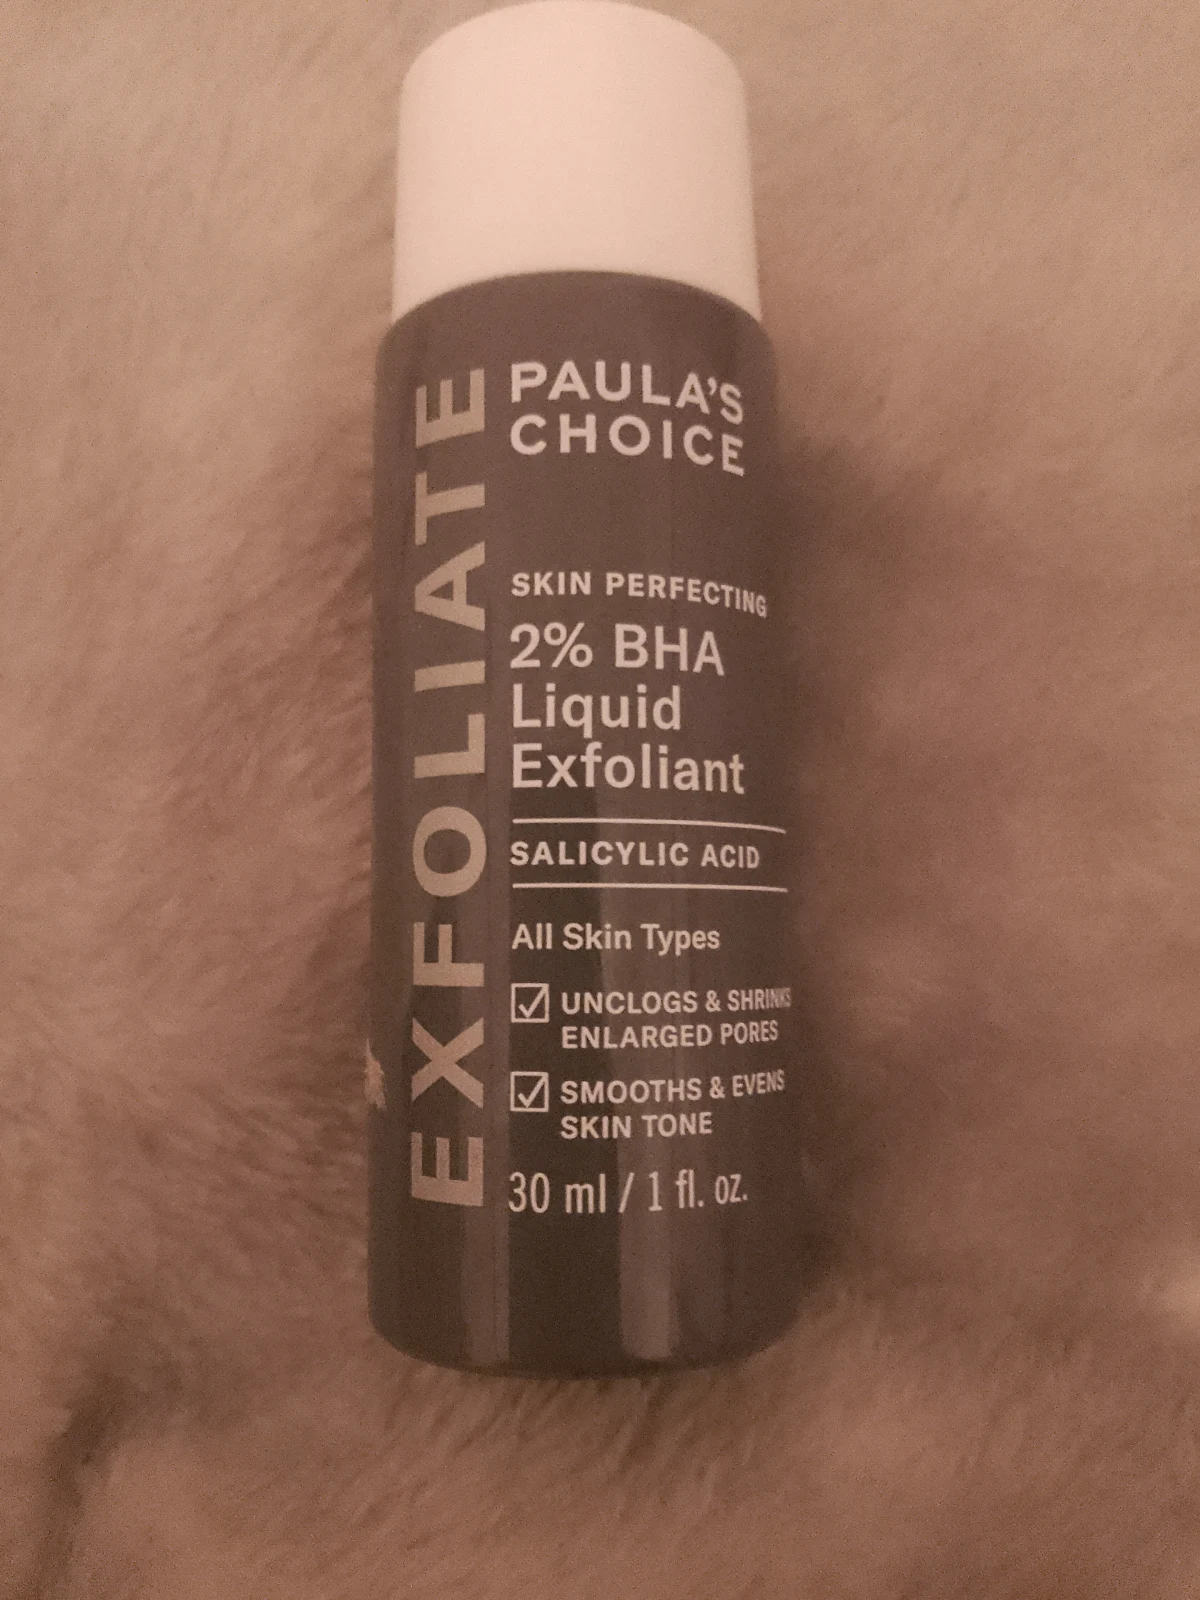 Skin Perfecting 2% BHA Liquid Exfoliant - Mini - review image